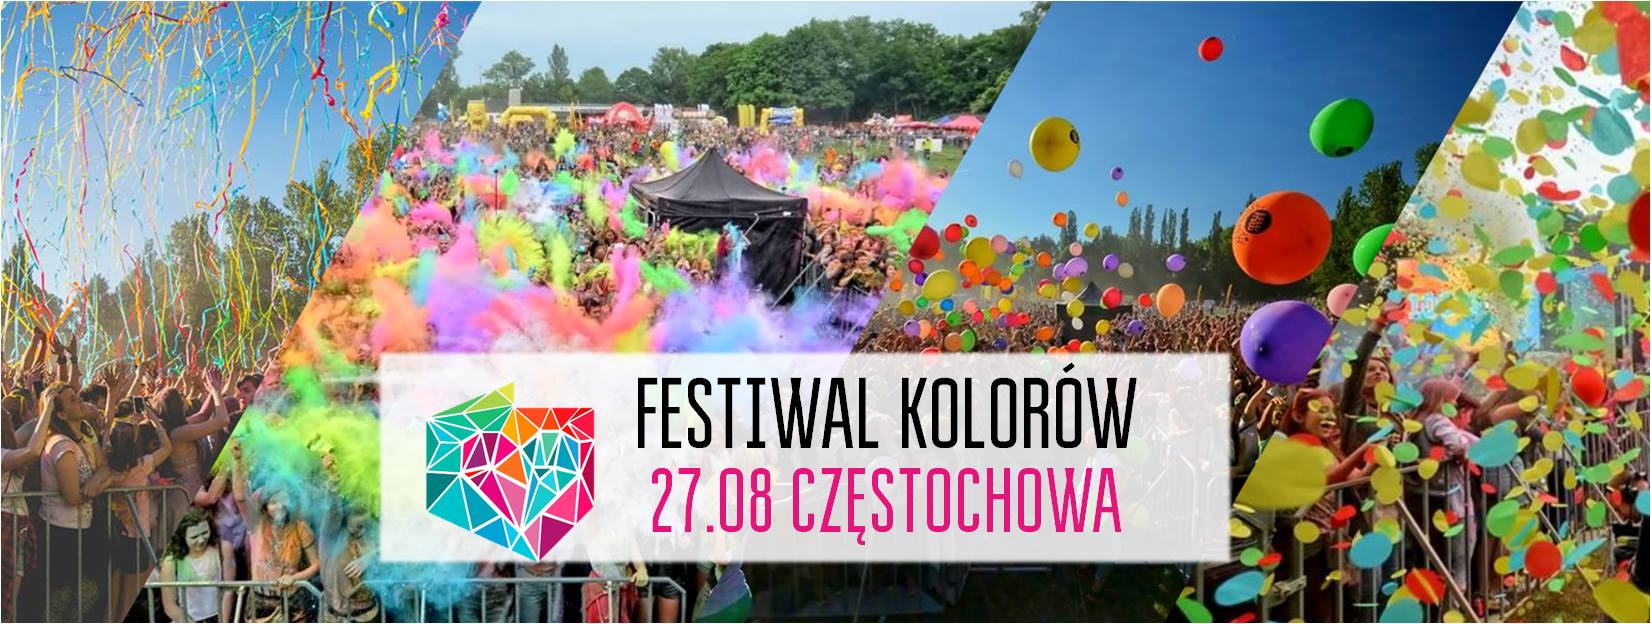 festiwal-kolorow